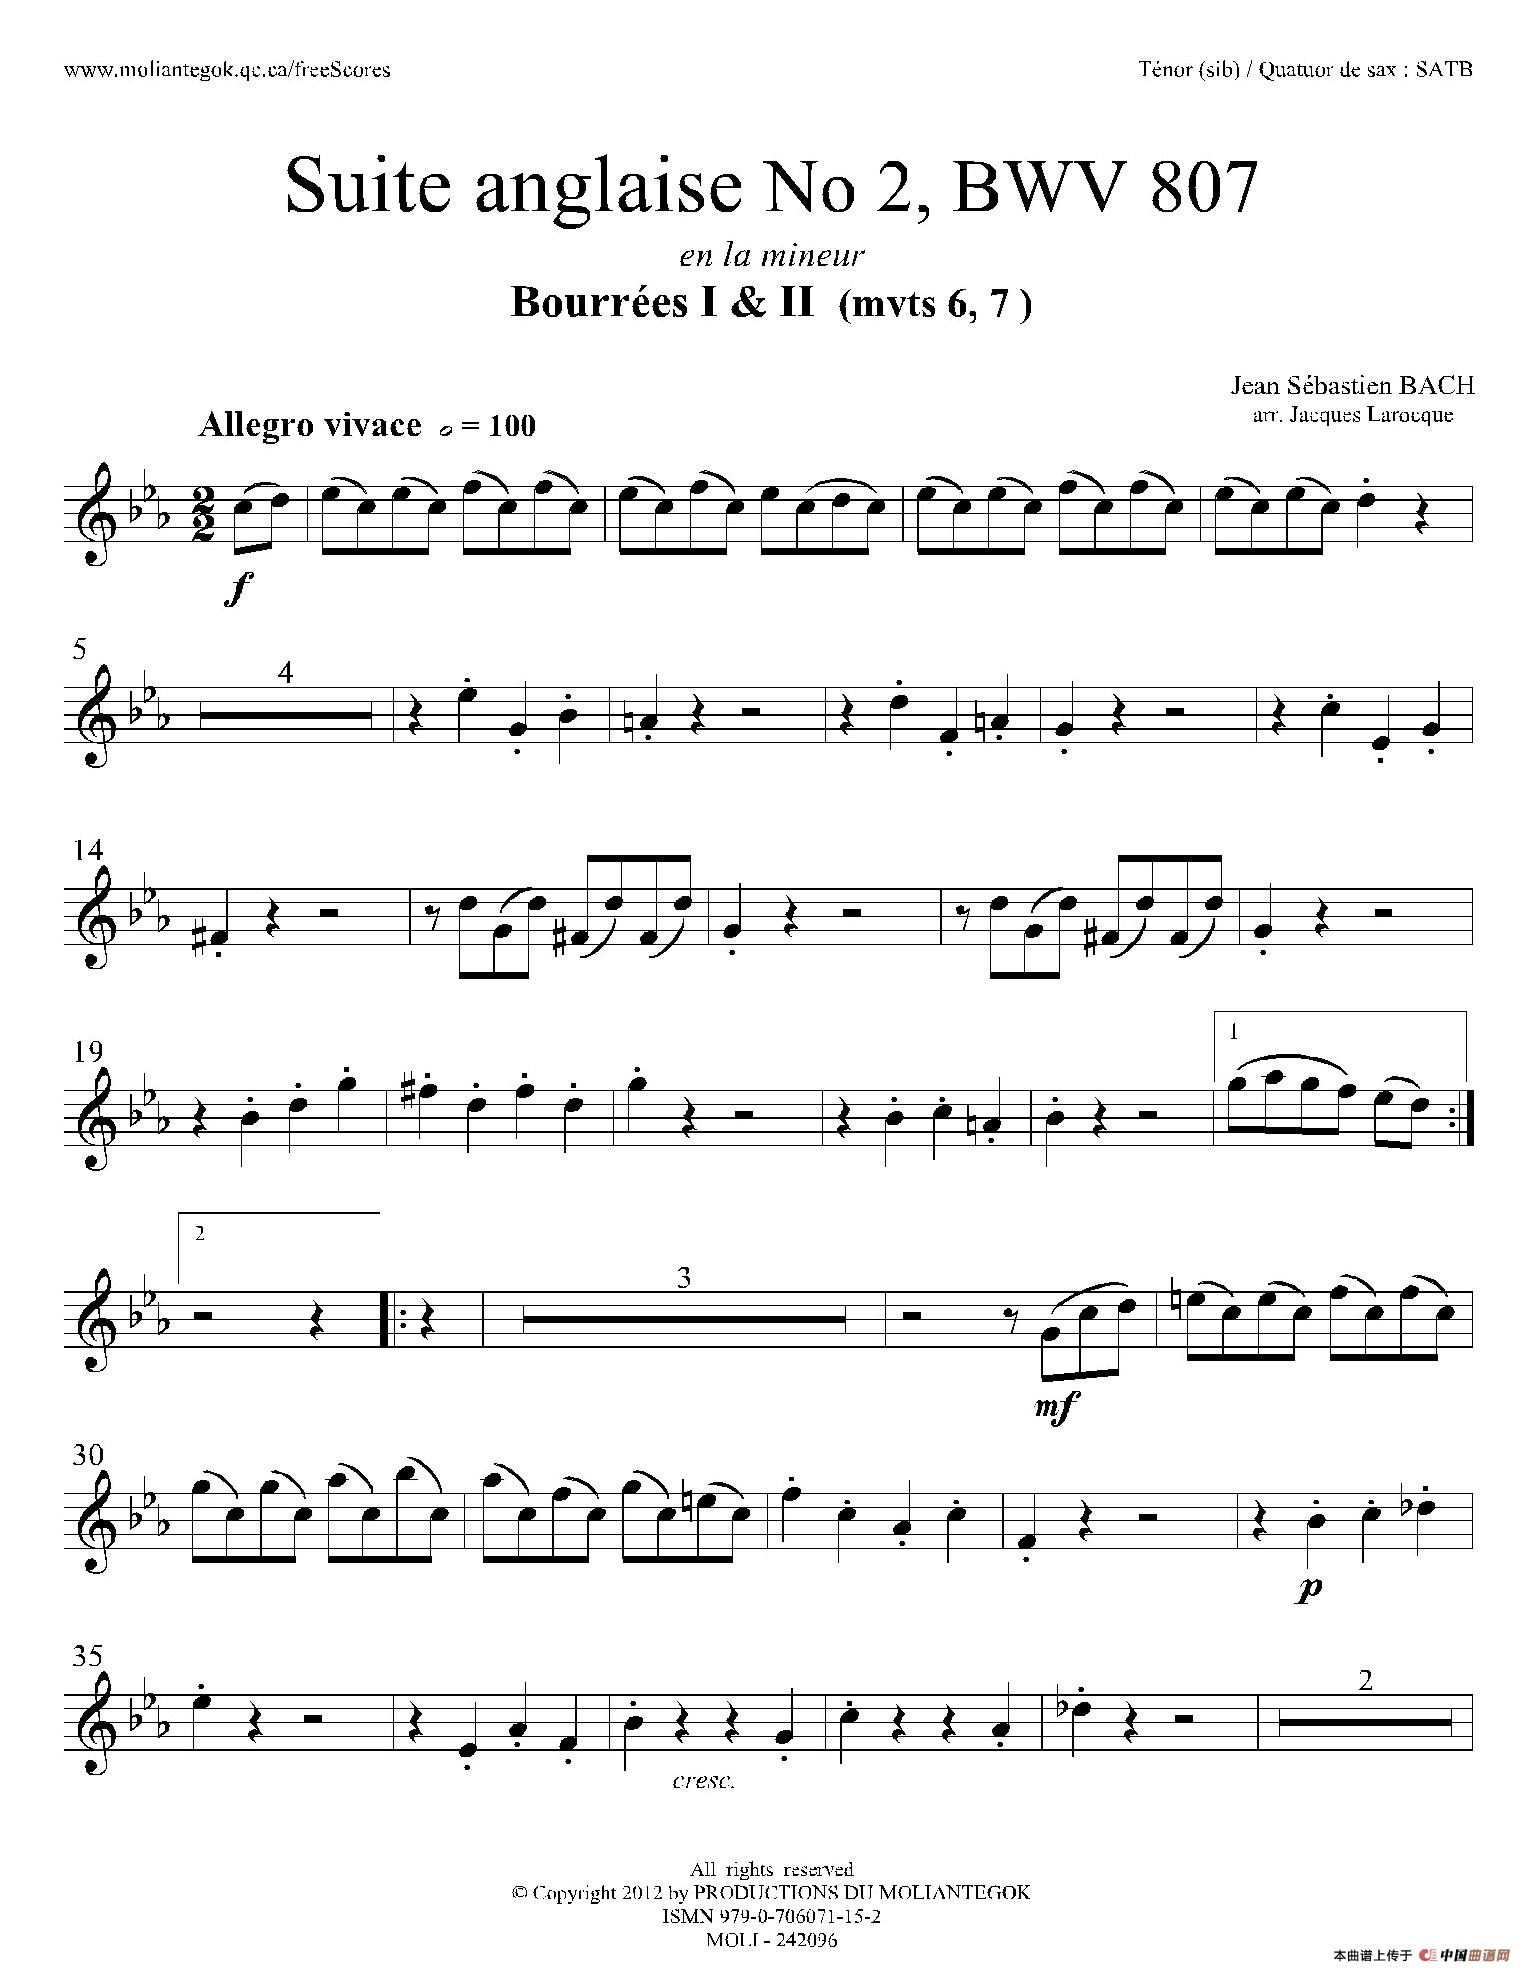 Suite anglaise No 2,BWV 807（法国组曲之二·布列舞曲）